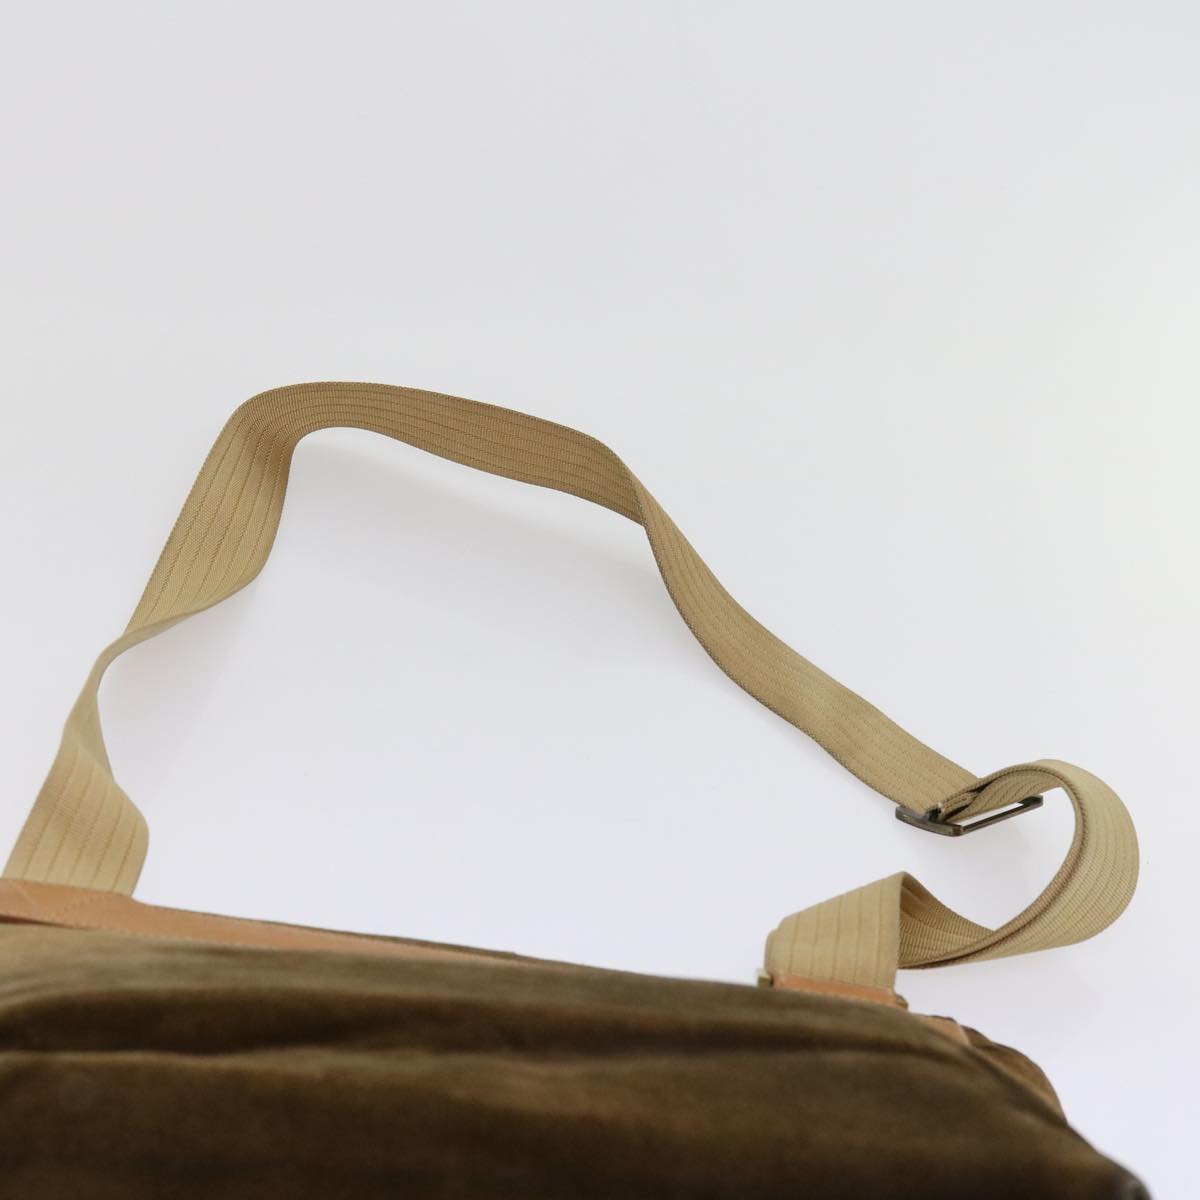 Salvatore Ferragamo Shoulder Bag Suede Canvas 2Set Brown Black Auth bs11148